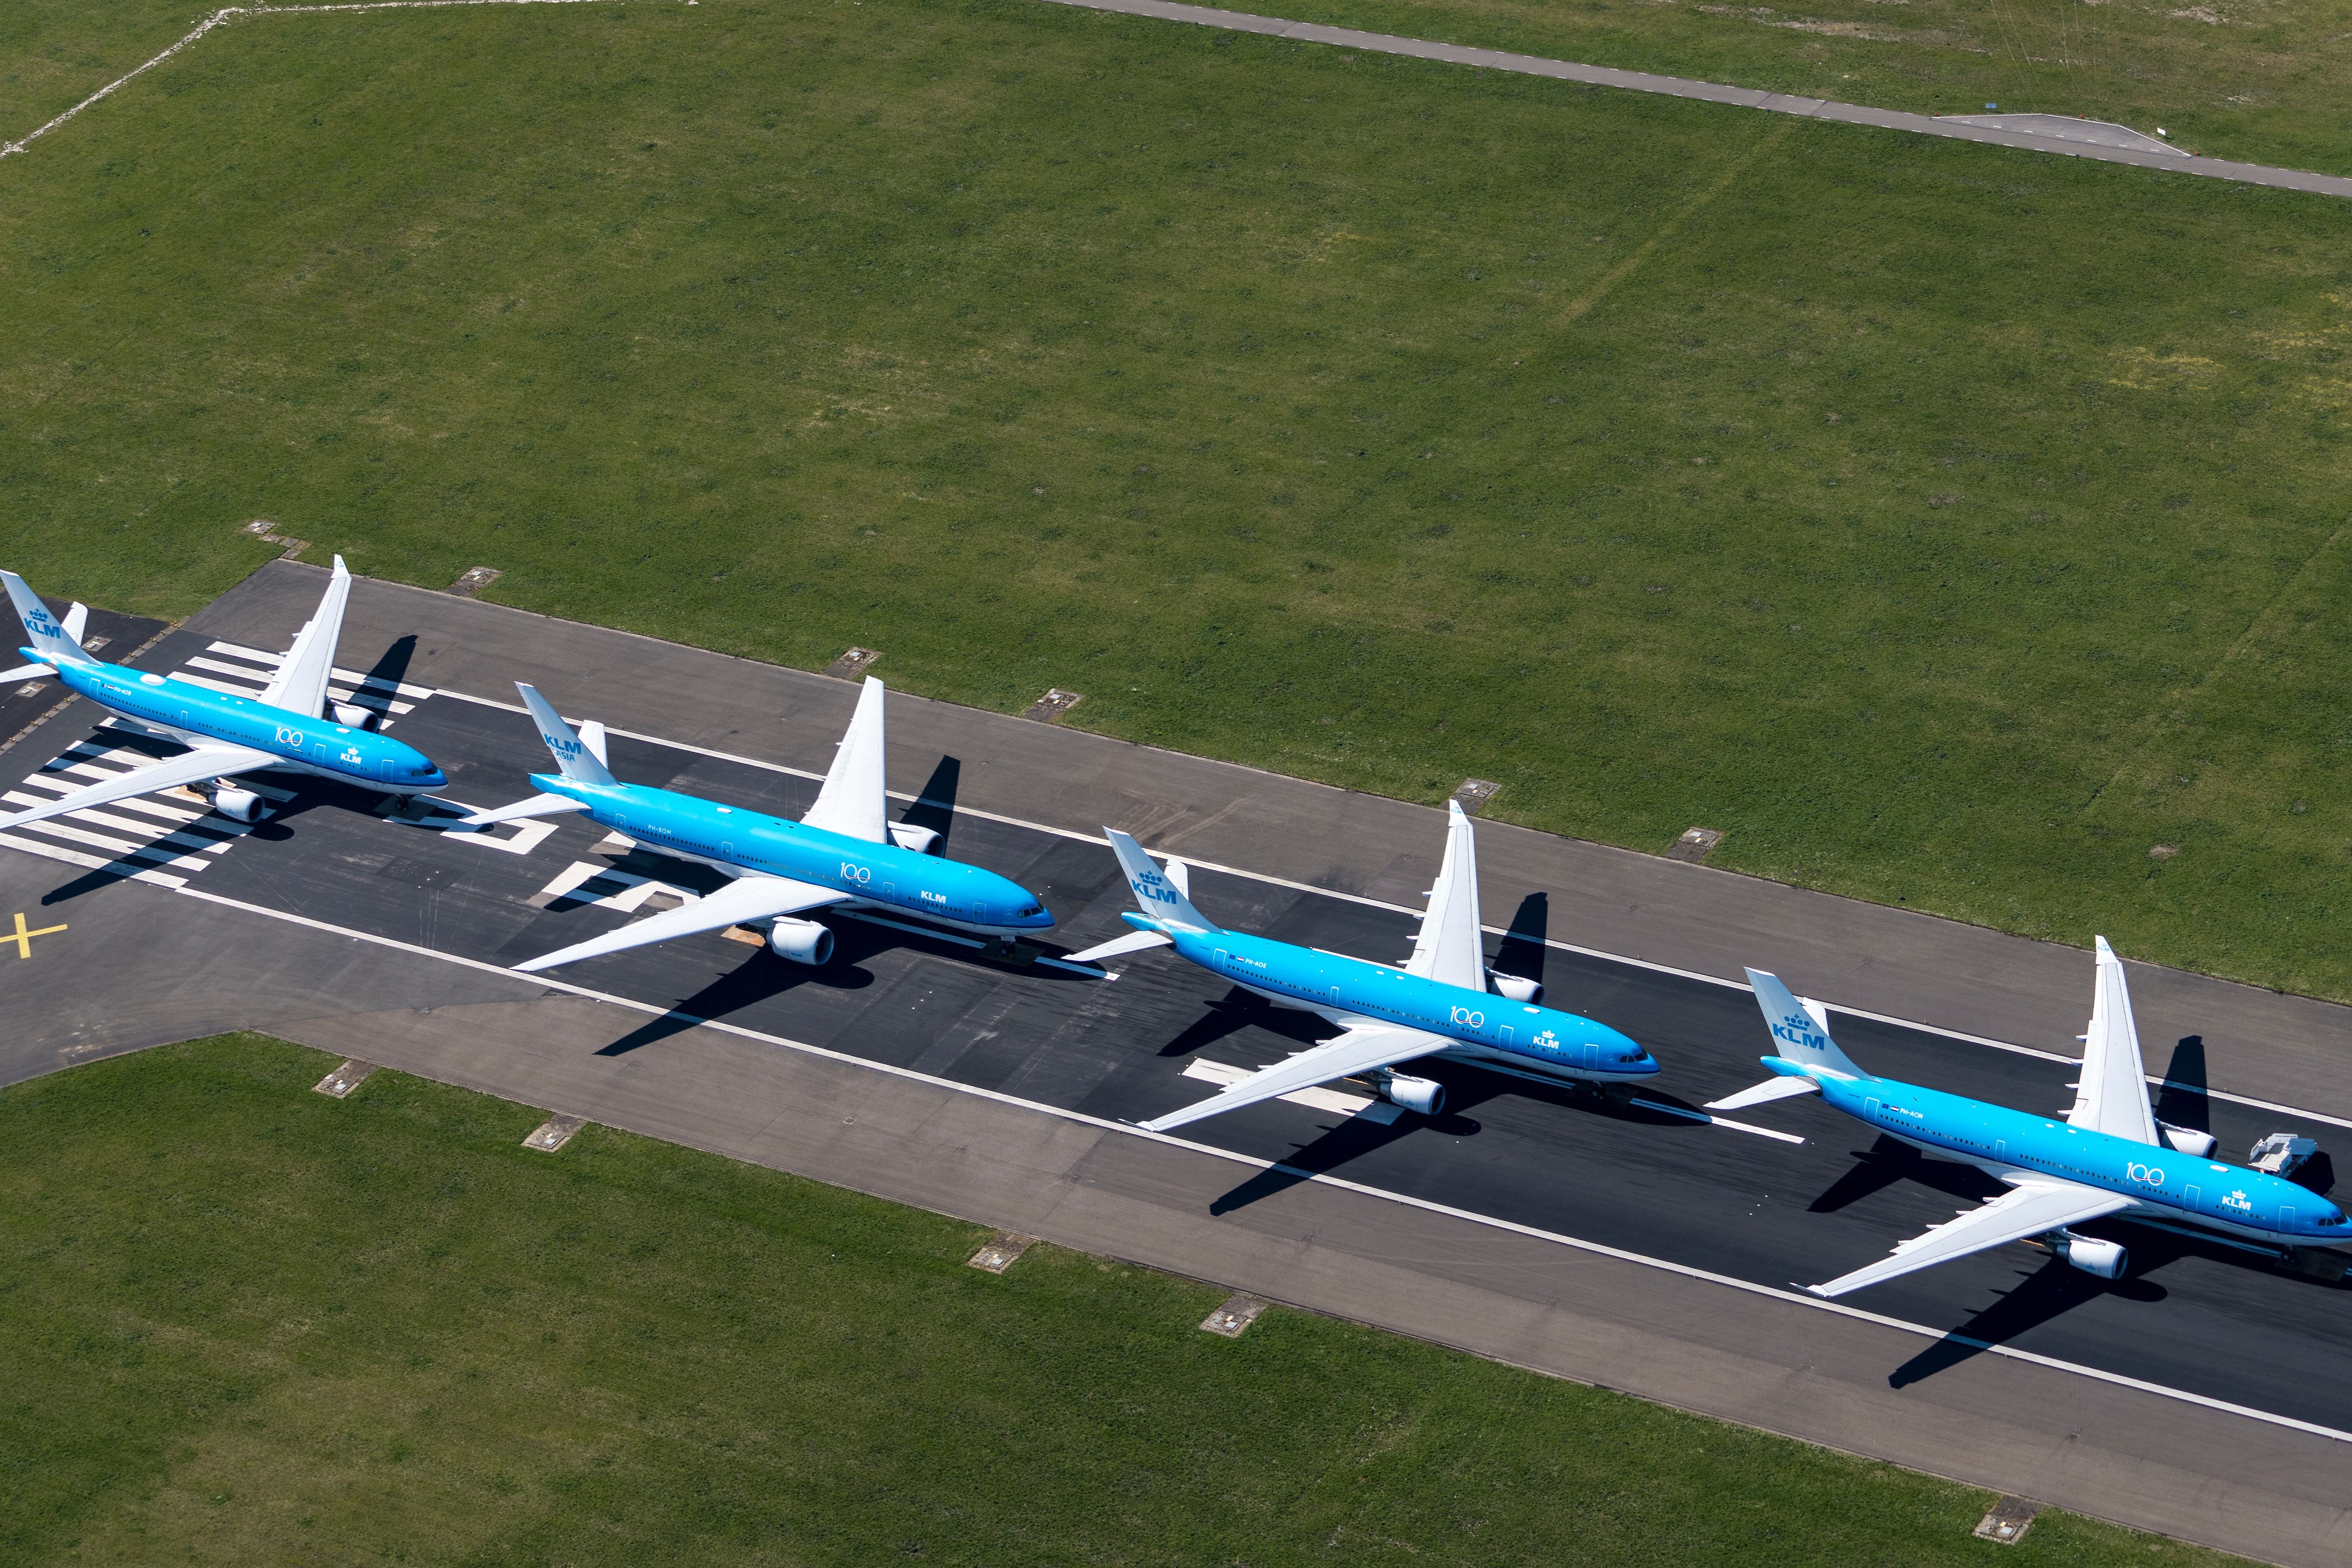 A fleet of KLM aircraft standing on the runway